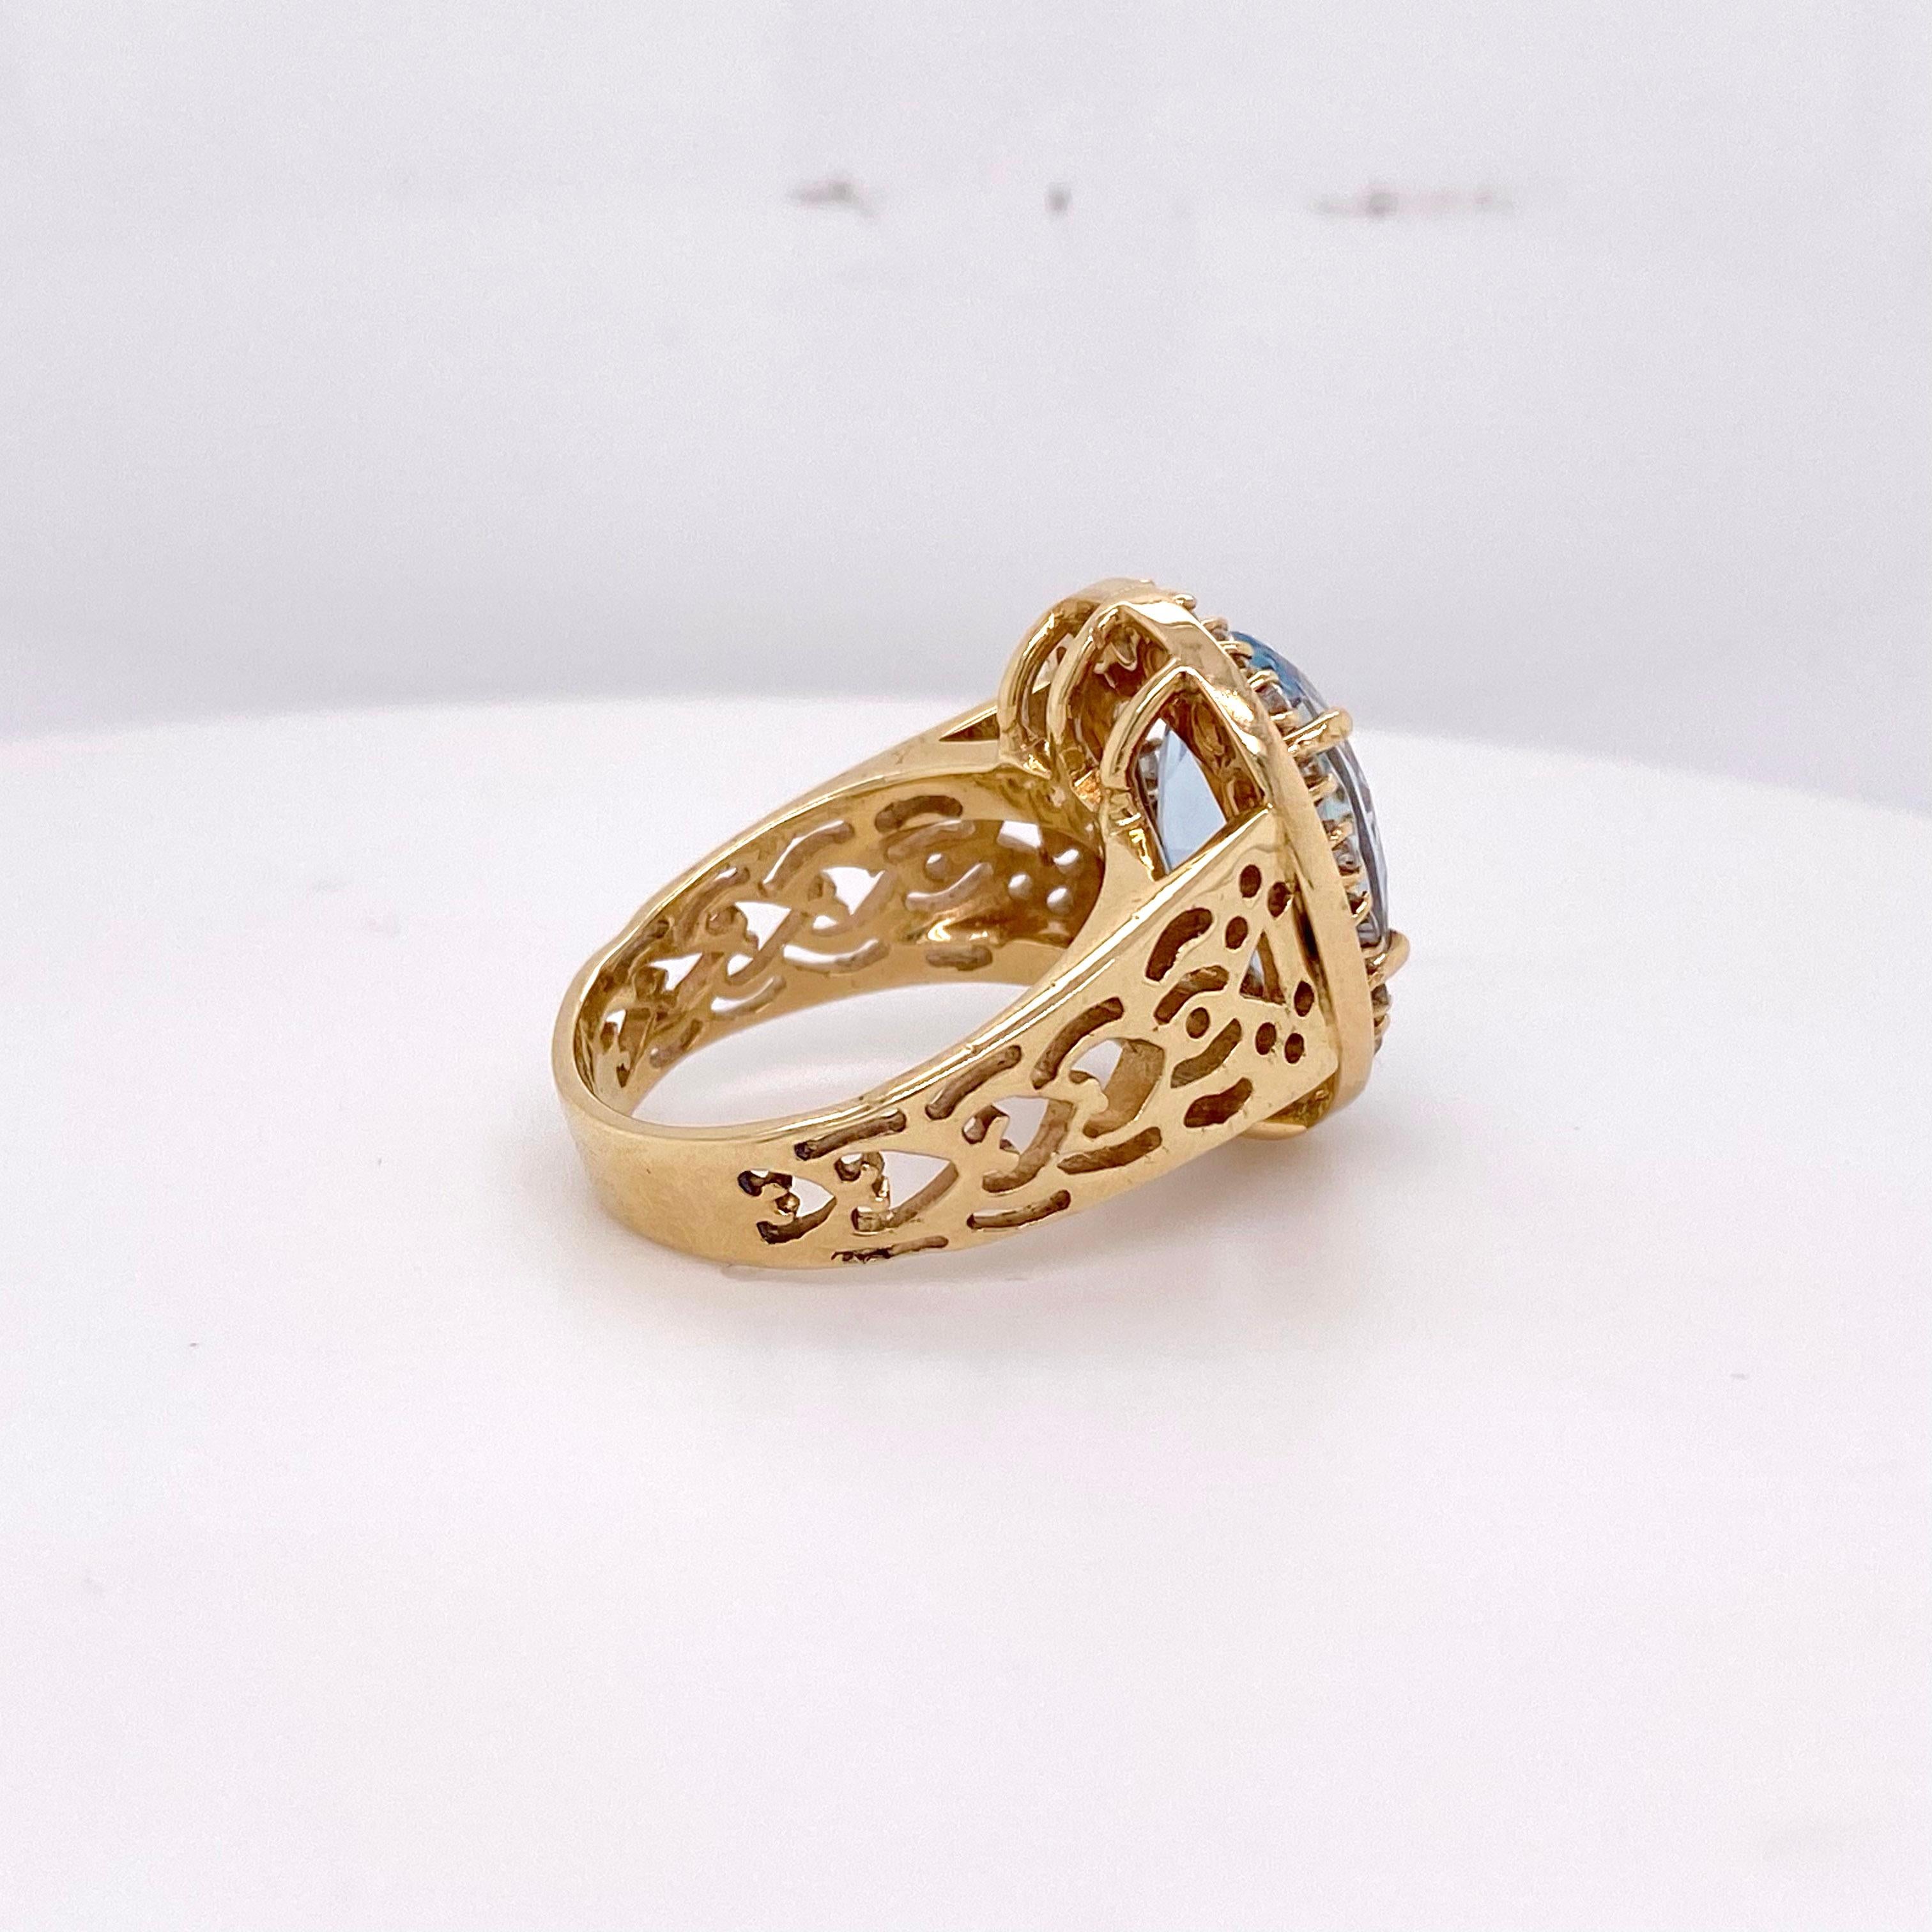 Oval Cut Aquamarine Diamond Ring, 5.55 Carats 14K Gold Filigree Design with Diamond Halo For Sale